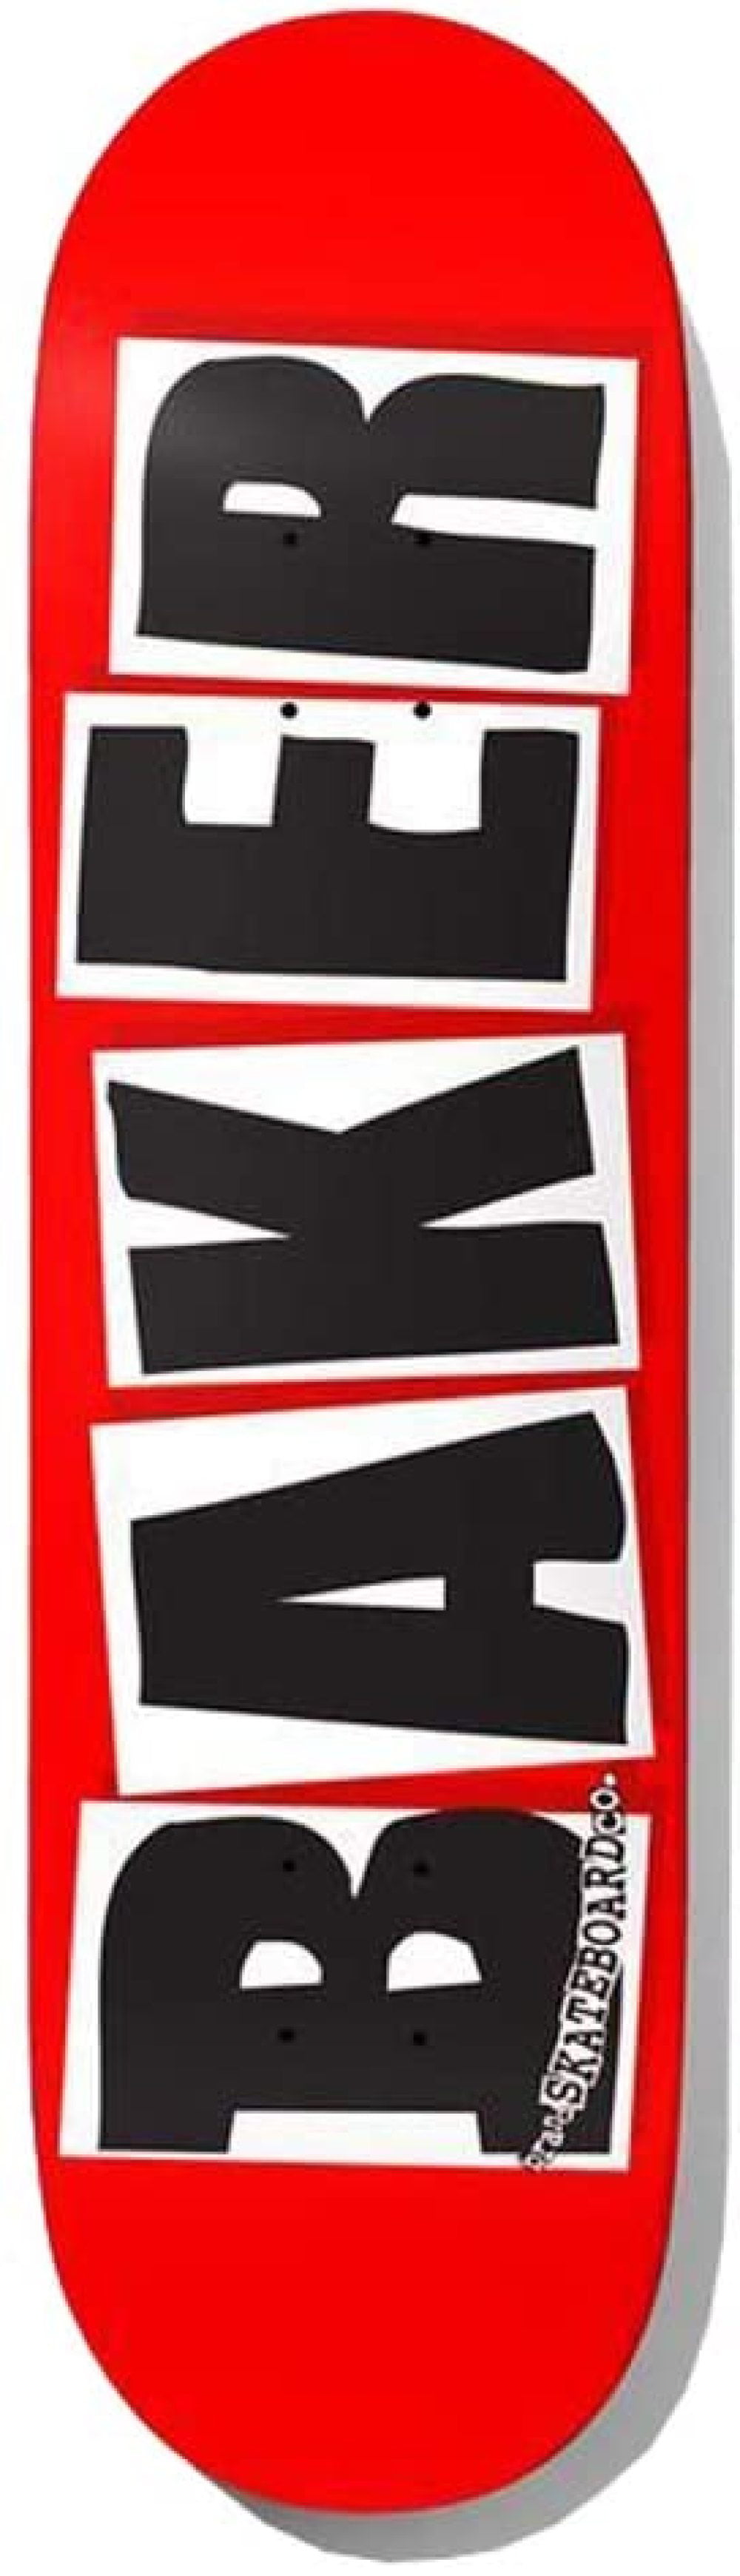 Baker Skateboards Mini Logo Red 5' x 3' New Wall Cloth Banner Garage Bedroom 